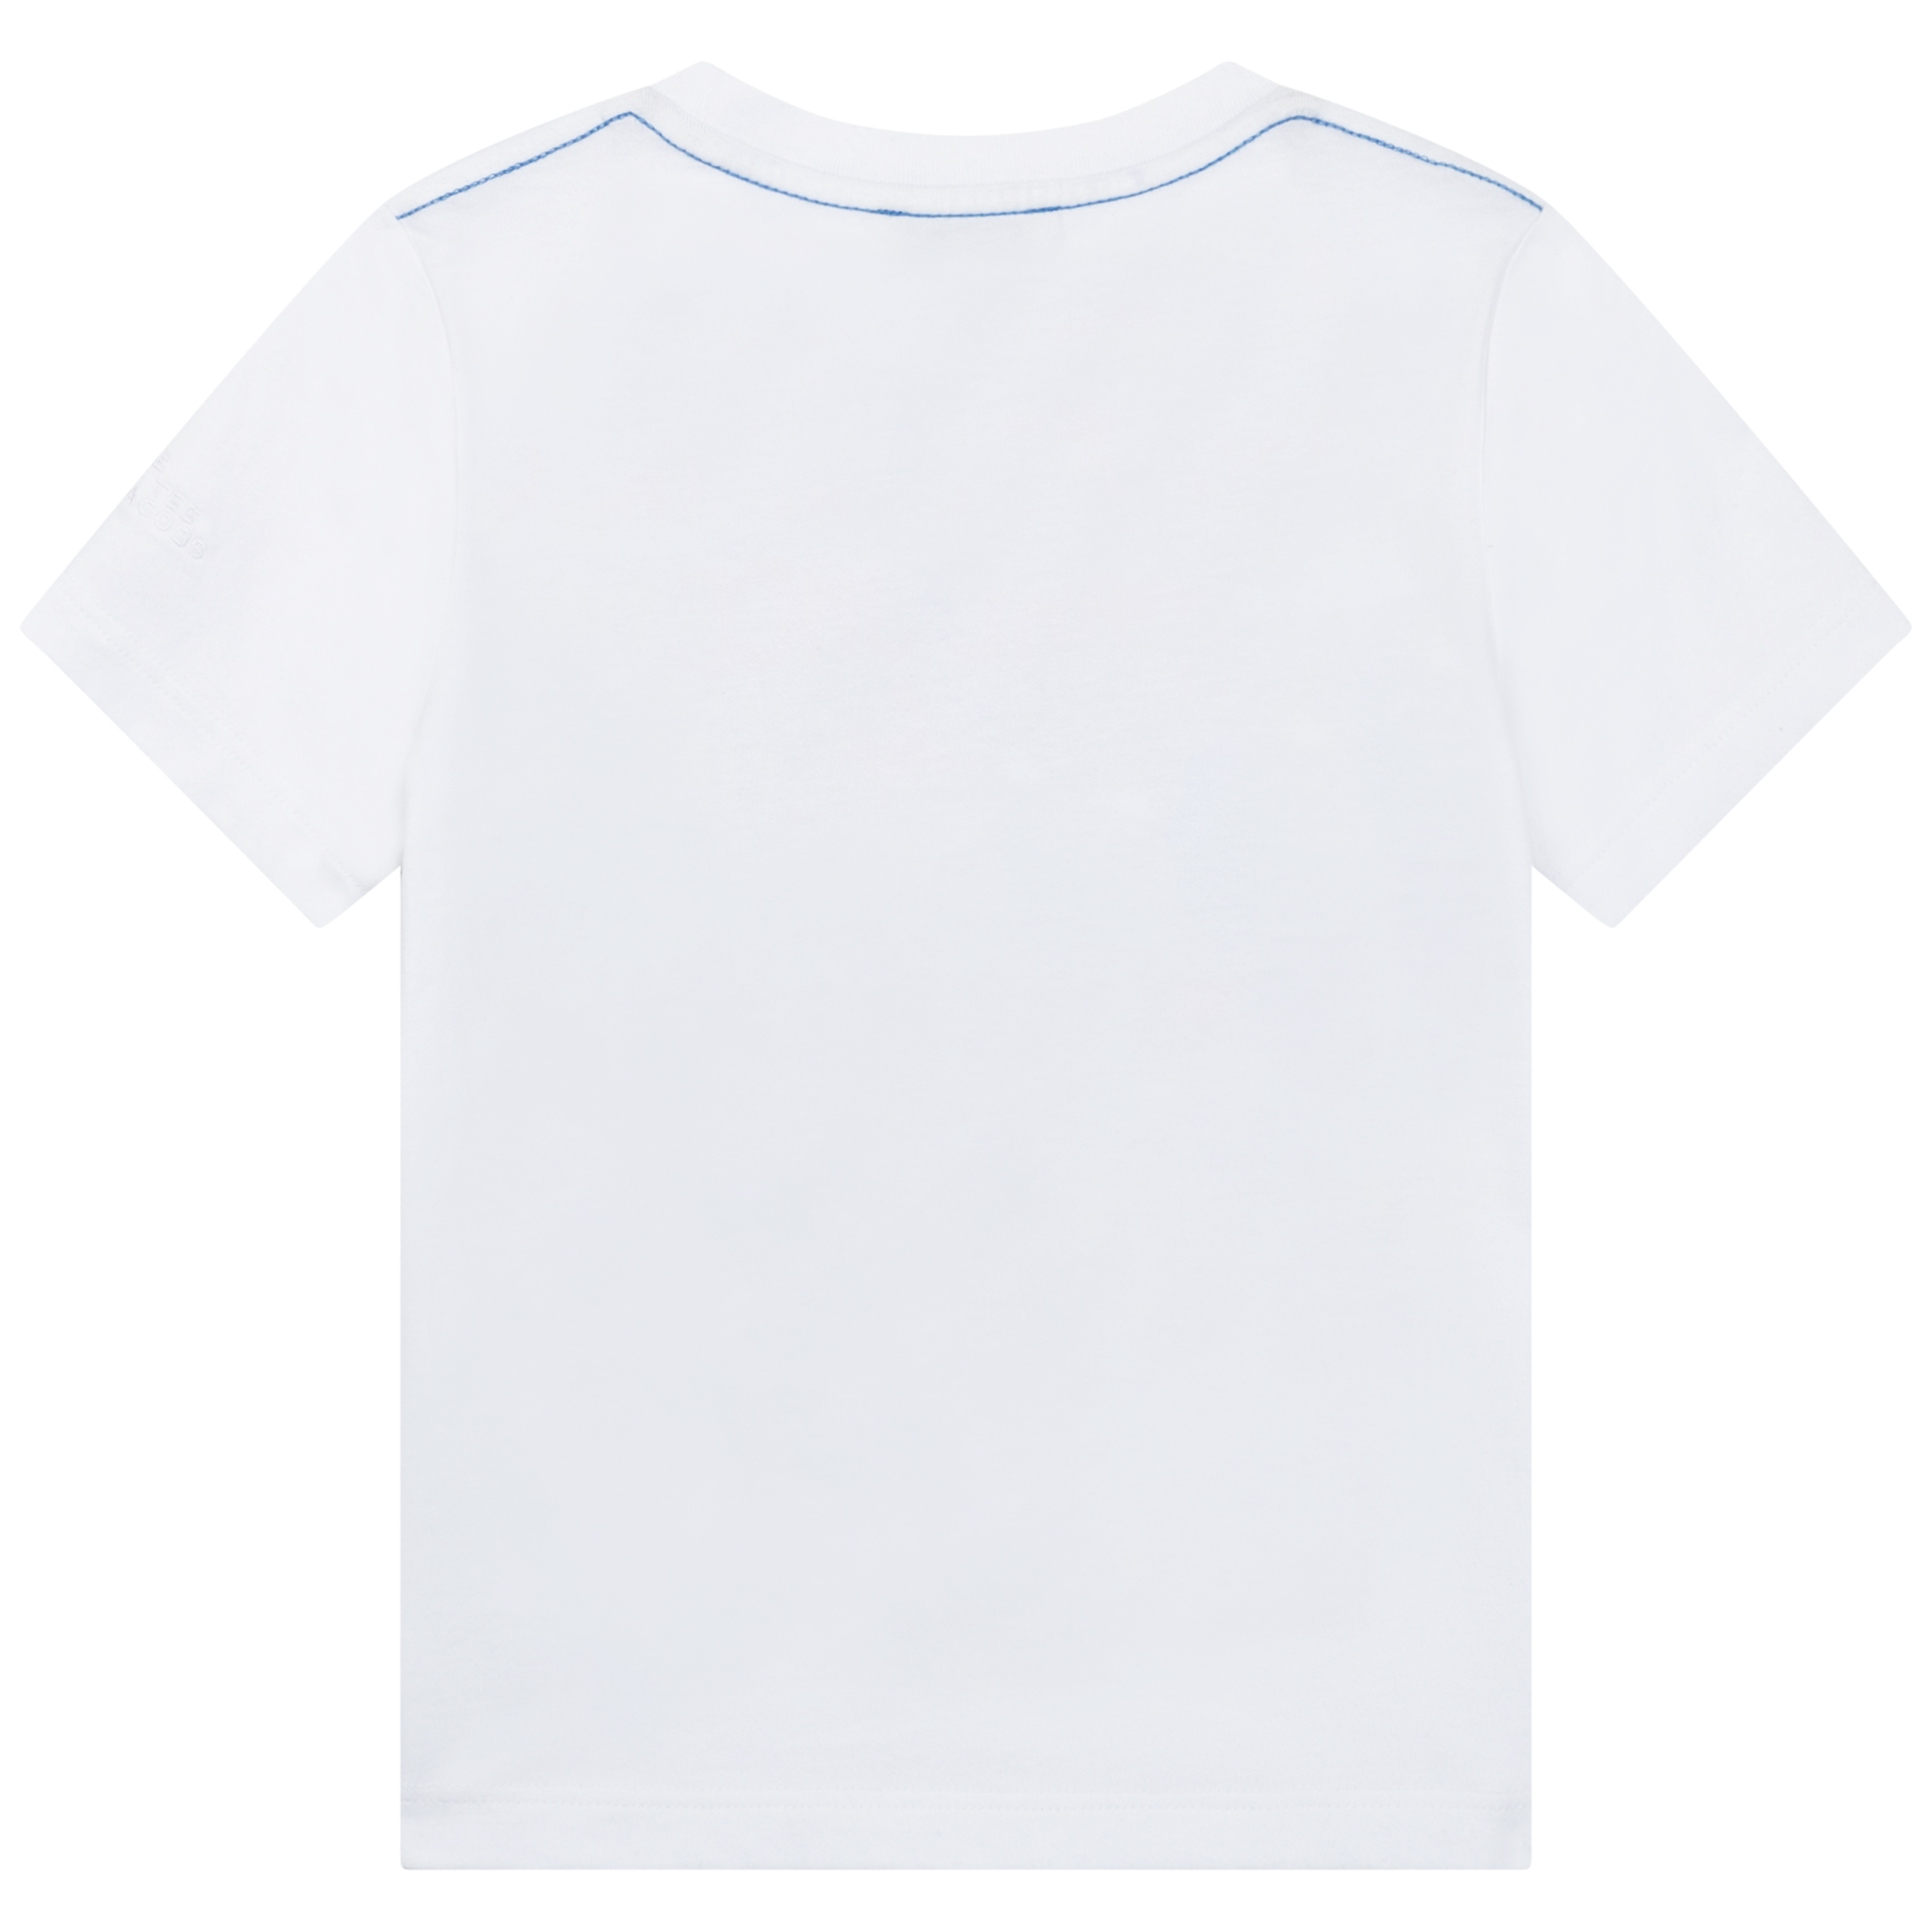 Kurzarm T-Shirt MARC JACOBS Für JUNGE